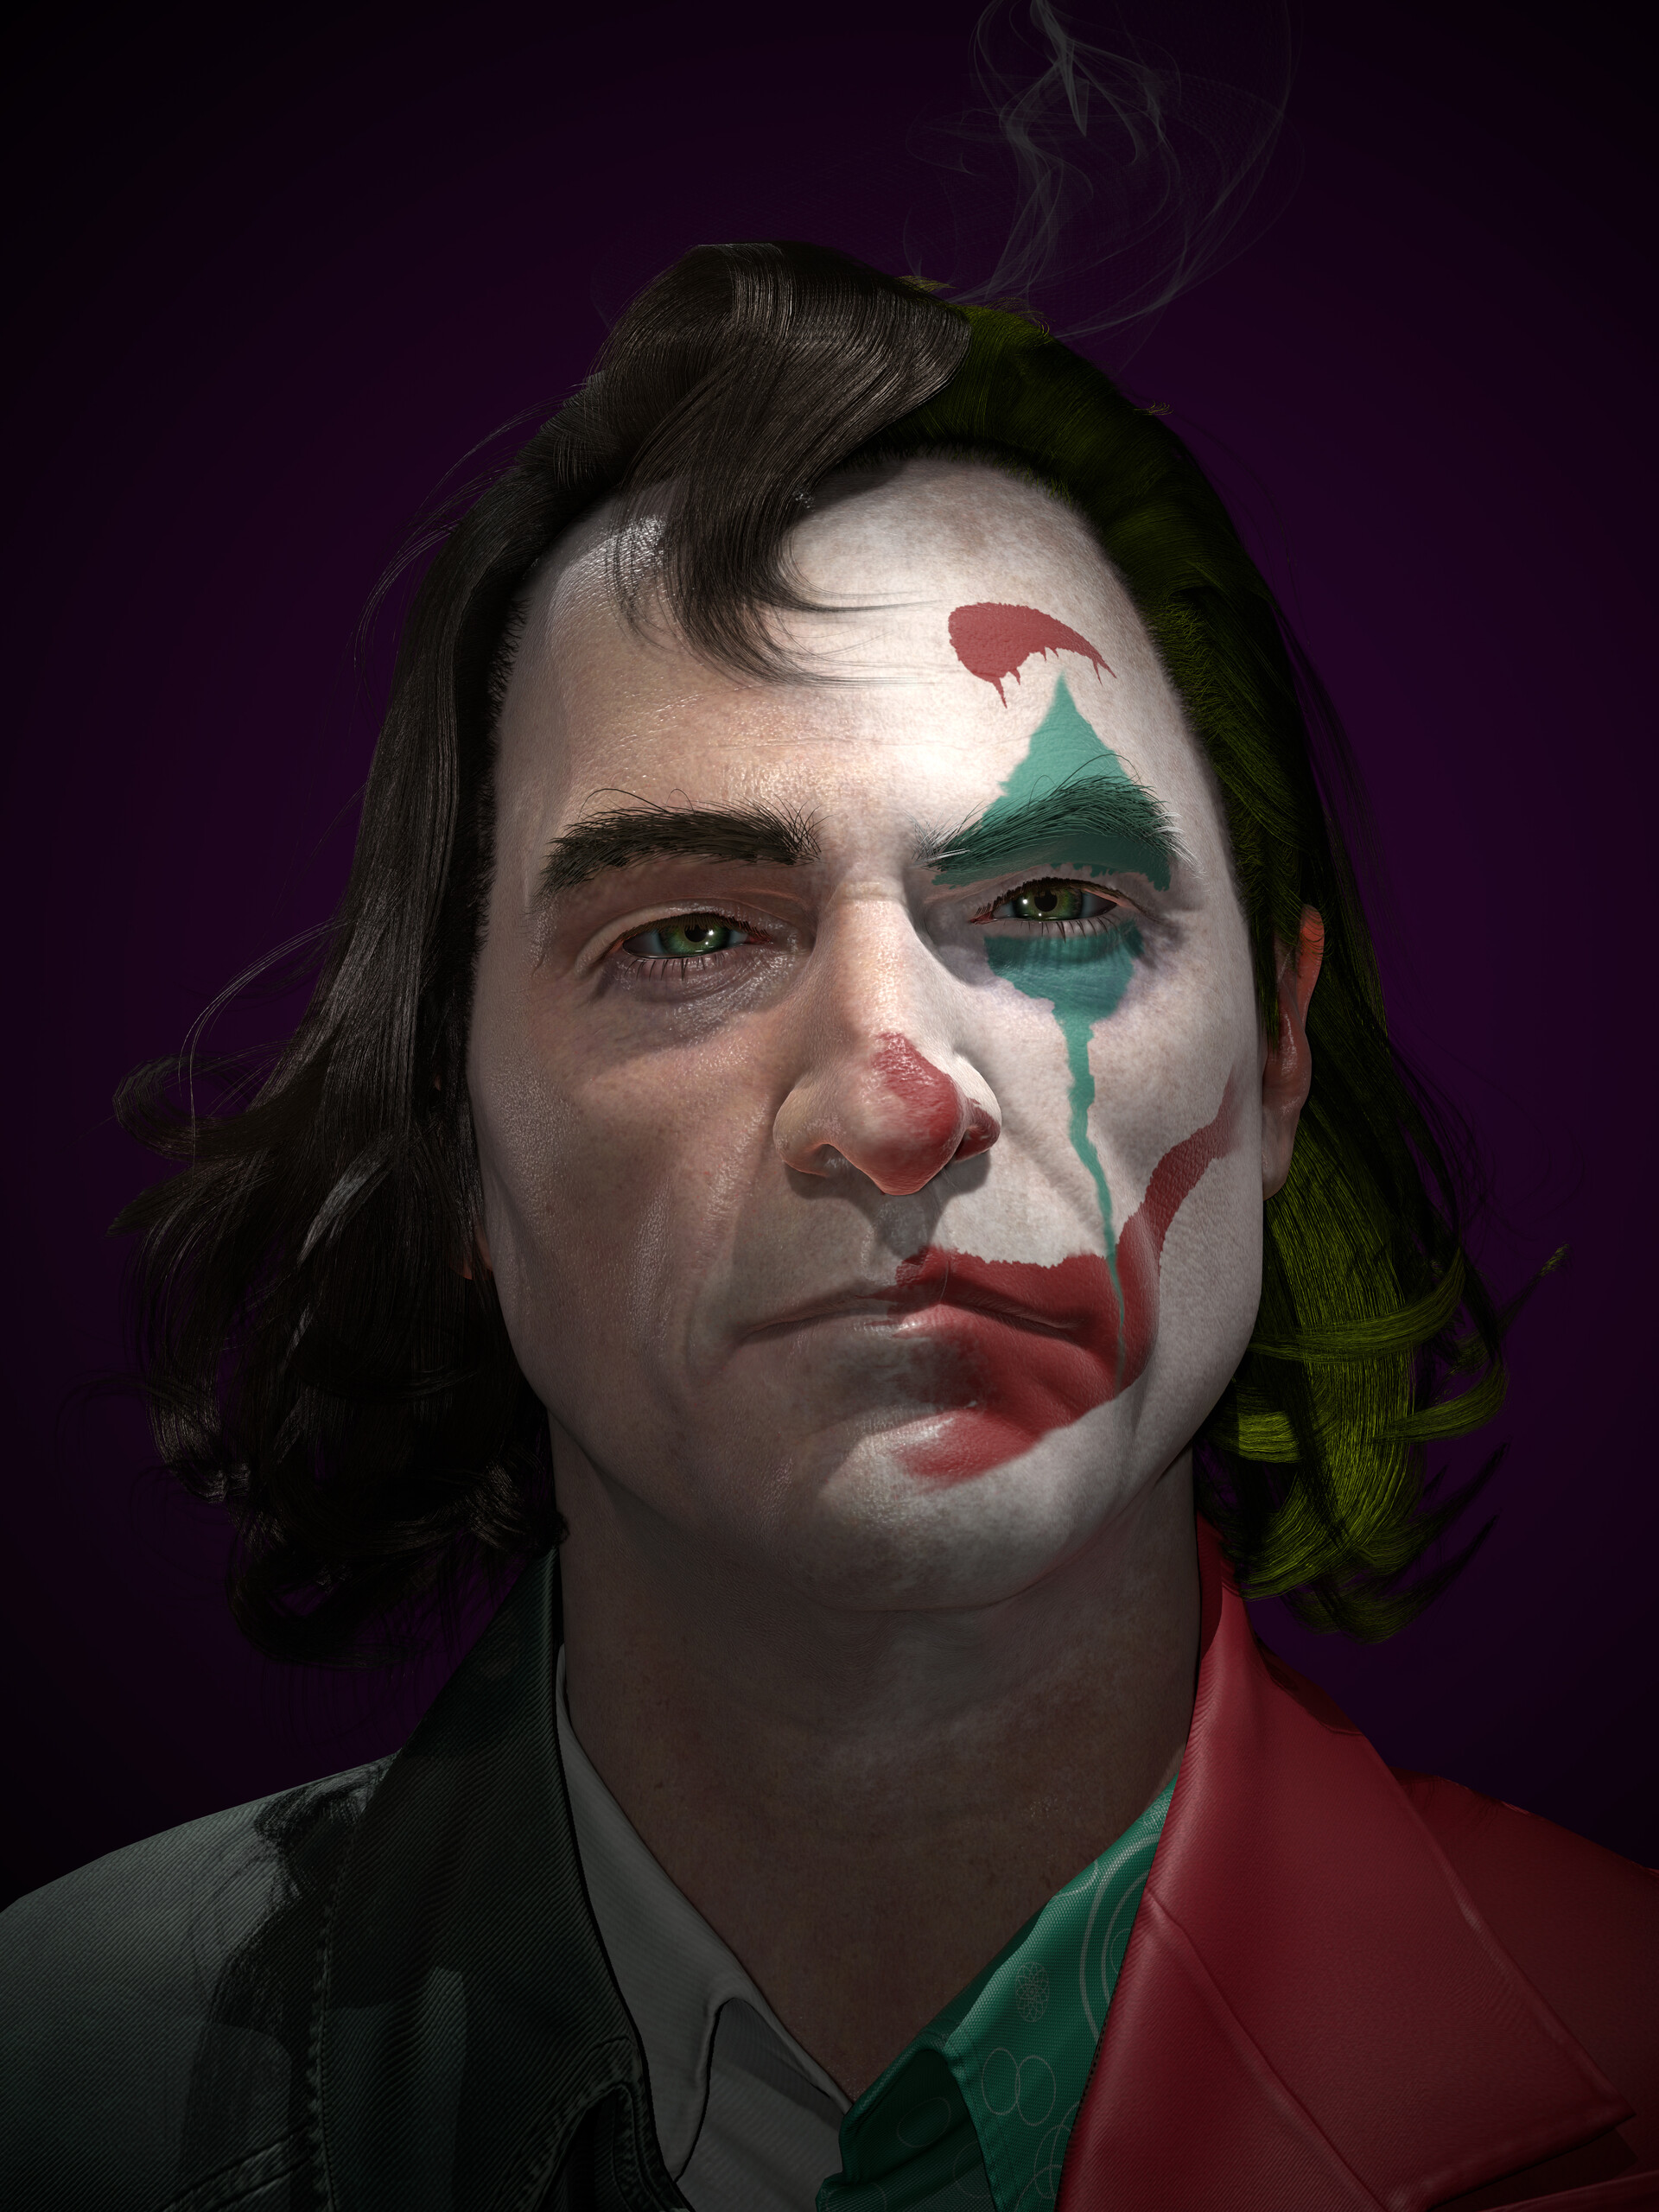 ArtStation - Joker / Joaquin Phoenix bust_Normal